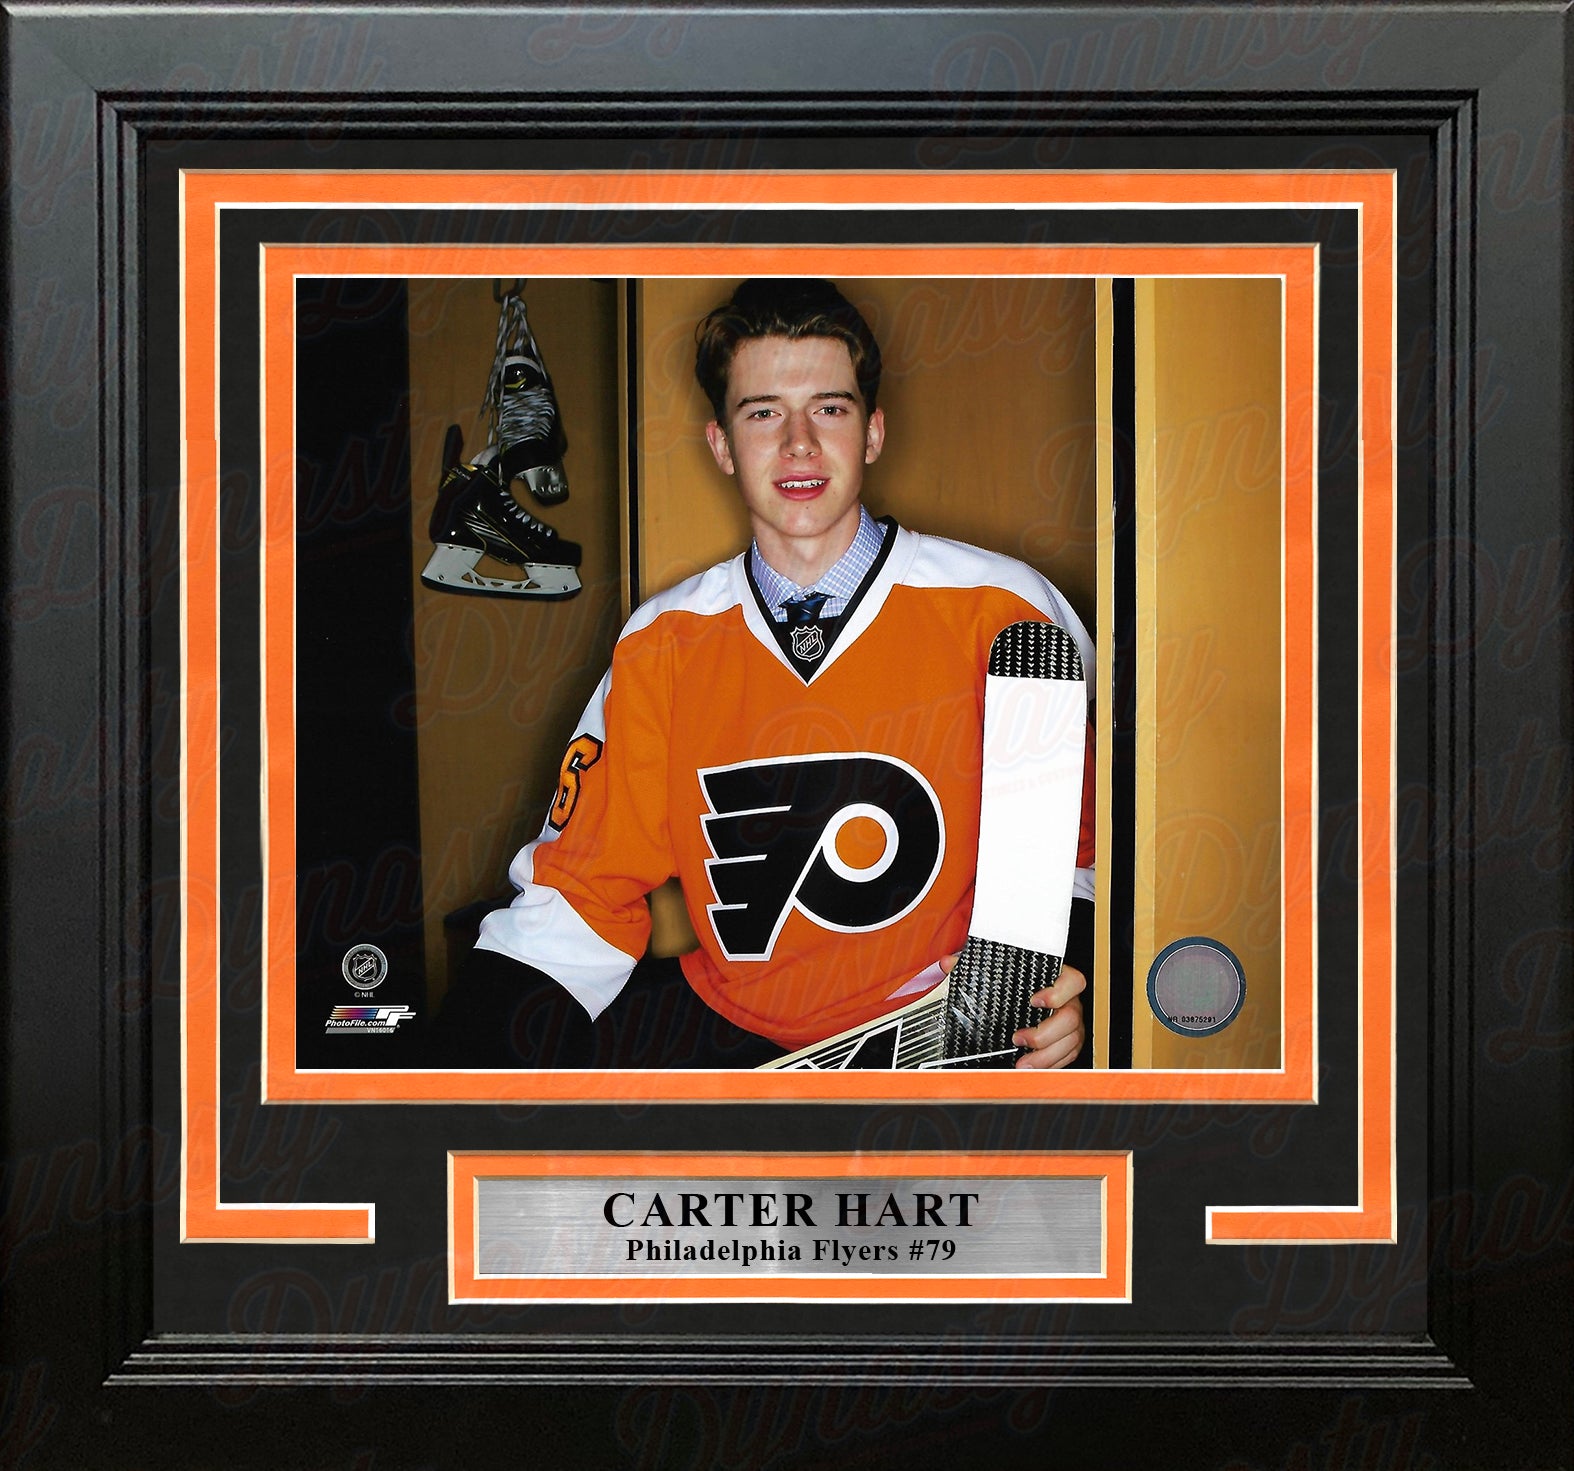 Carter Hart Philadelphia Flyers Locker Room 11 x 14 Framed Hockey Photo